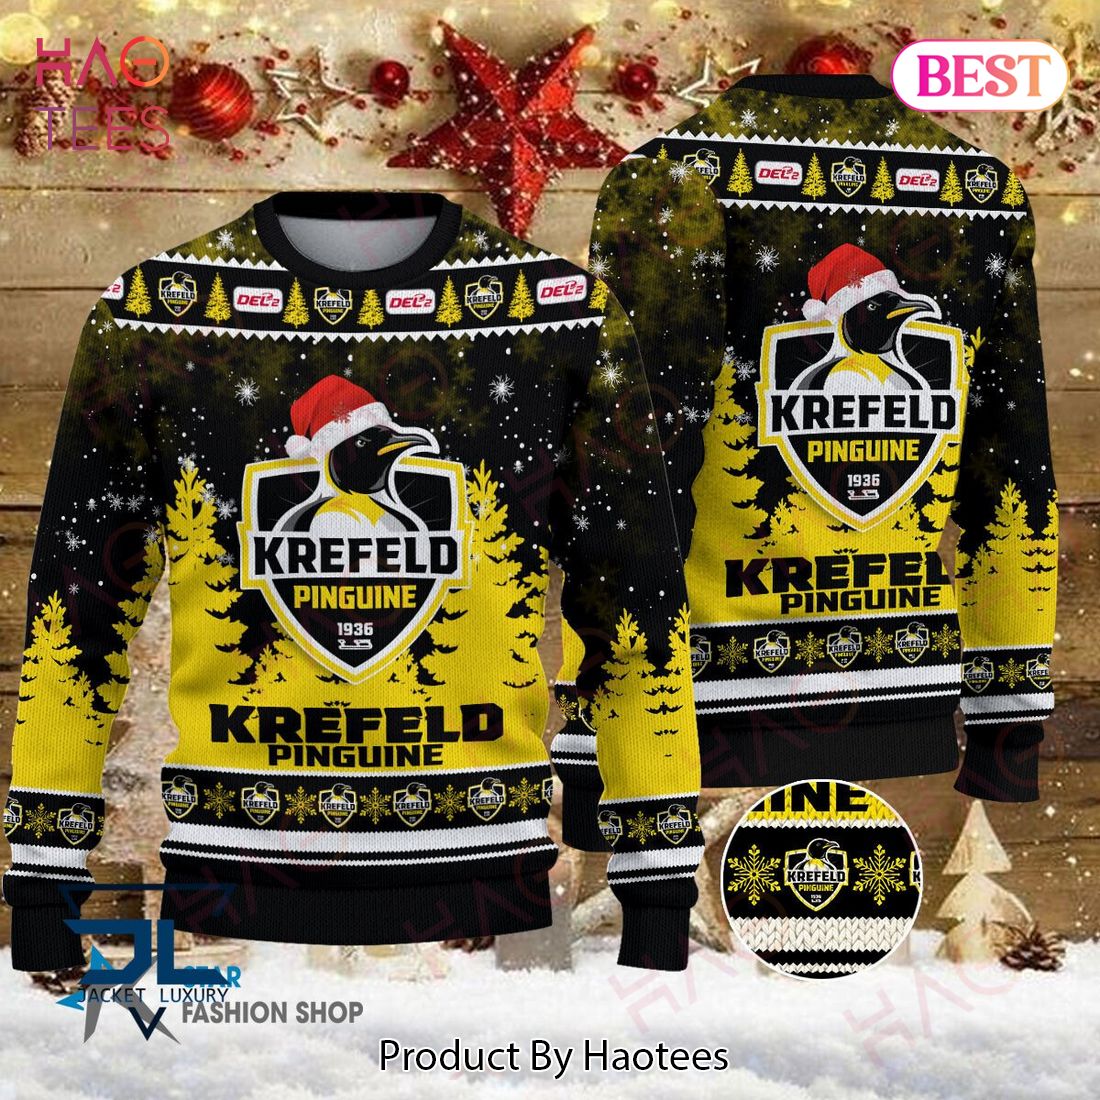 Krefeld Pinguine Luxury Brand Sweater Limited Edition